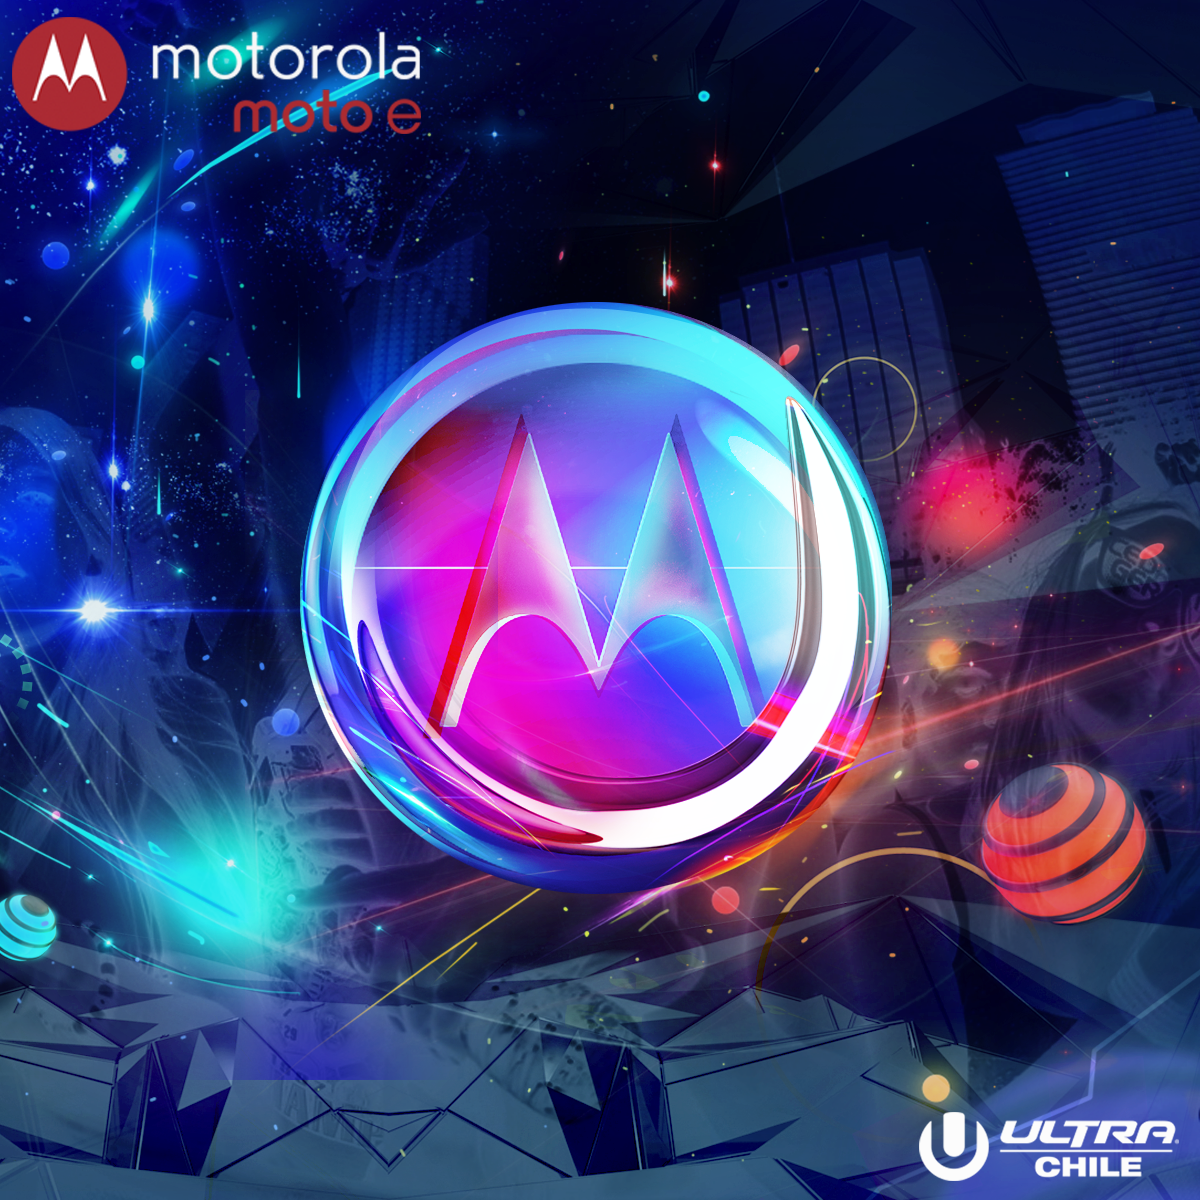 retouch festival electronic music UMF chile Motorola Ultra motorola Logotype design social media facebook